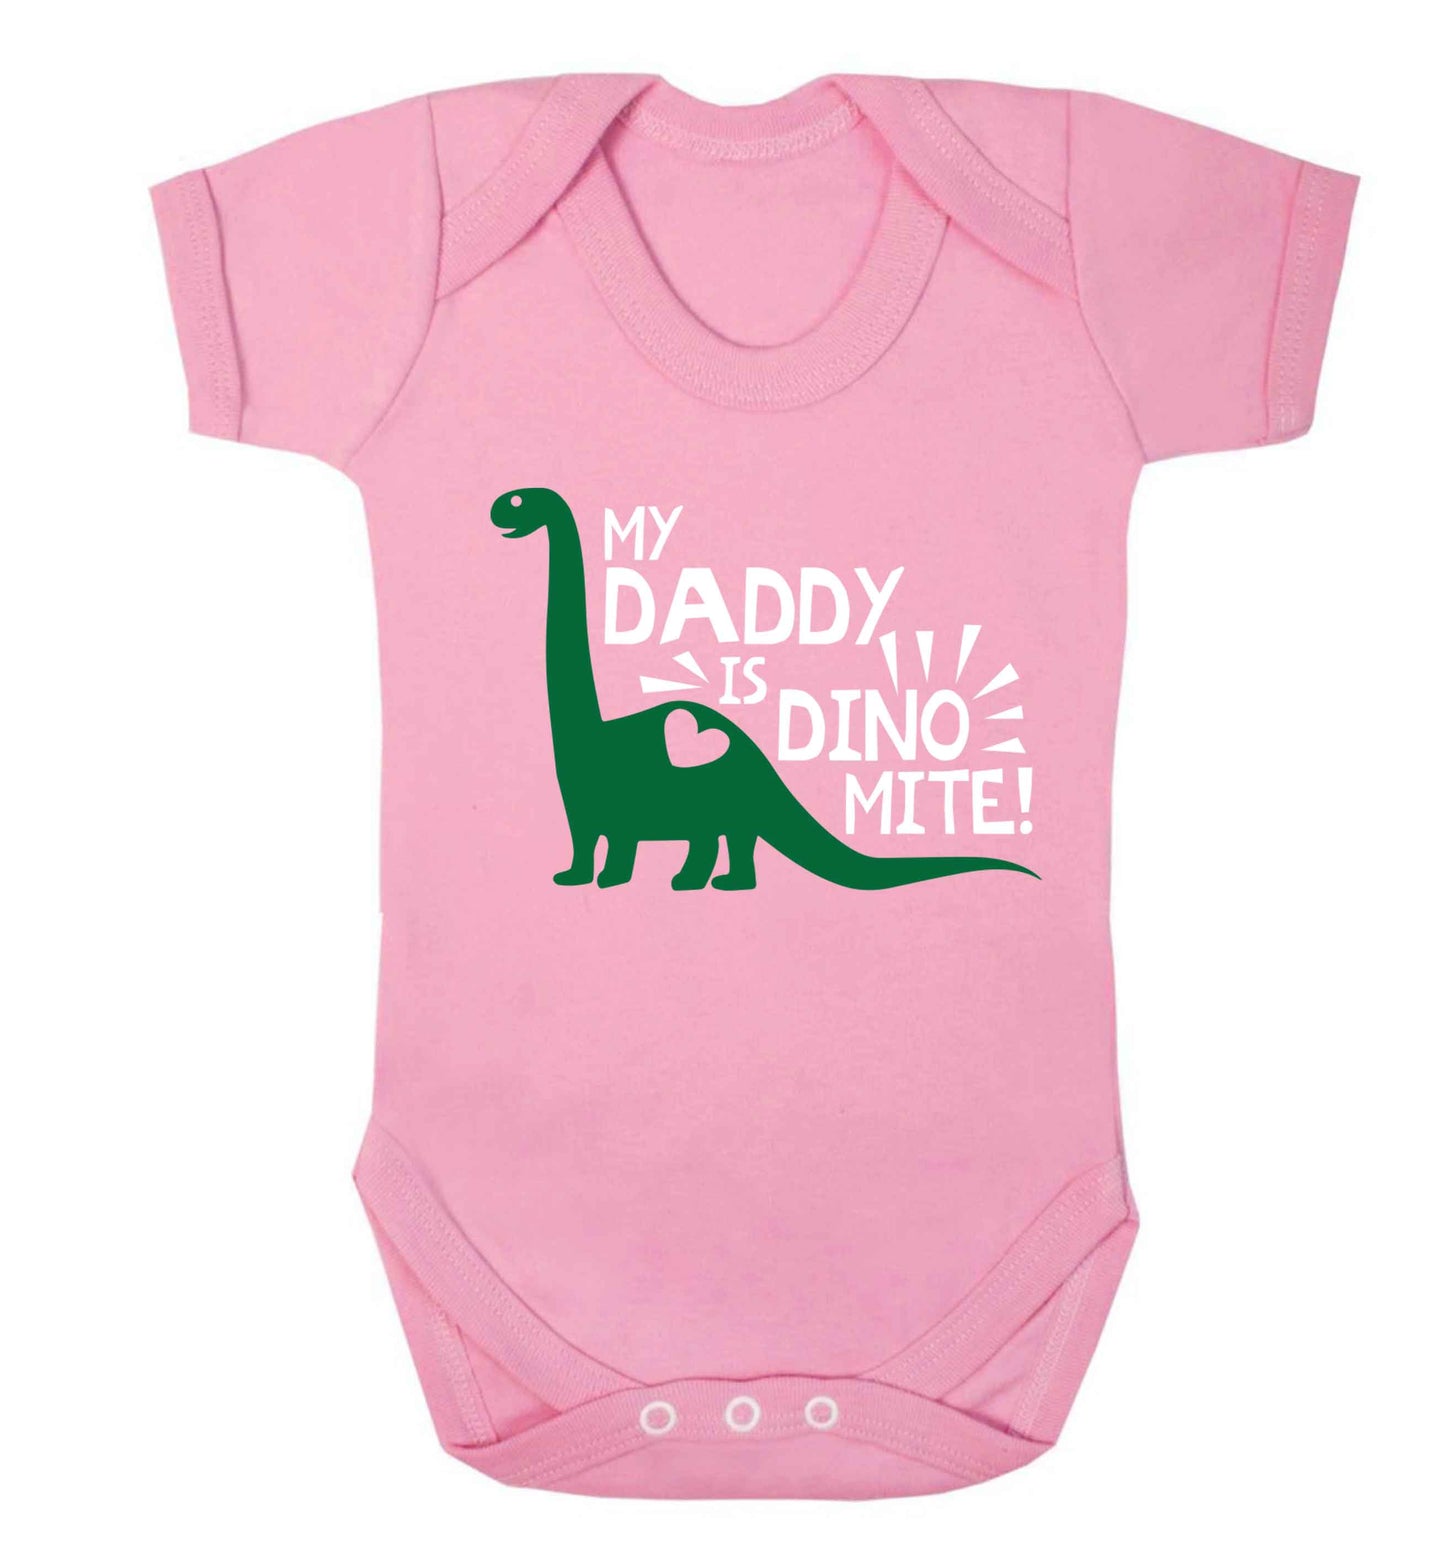 My daddy is dinomite! Baby Vest pale pink 18-24 months